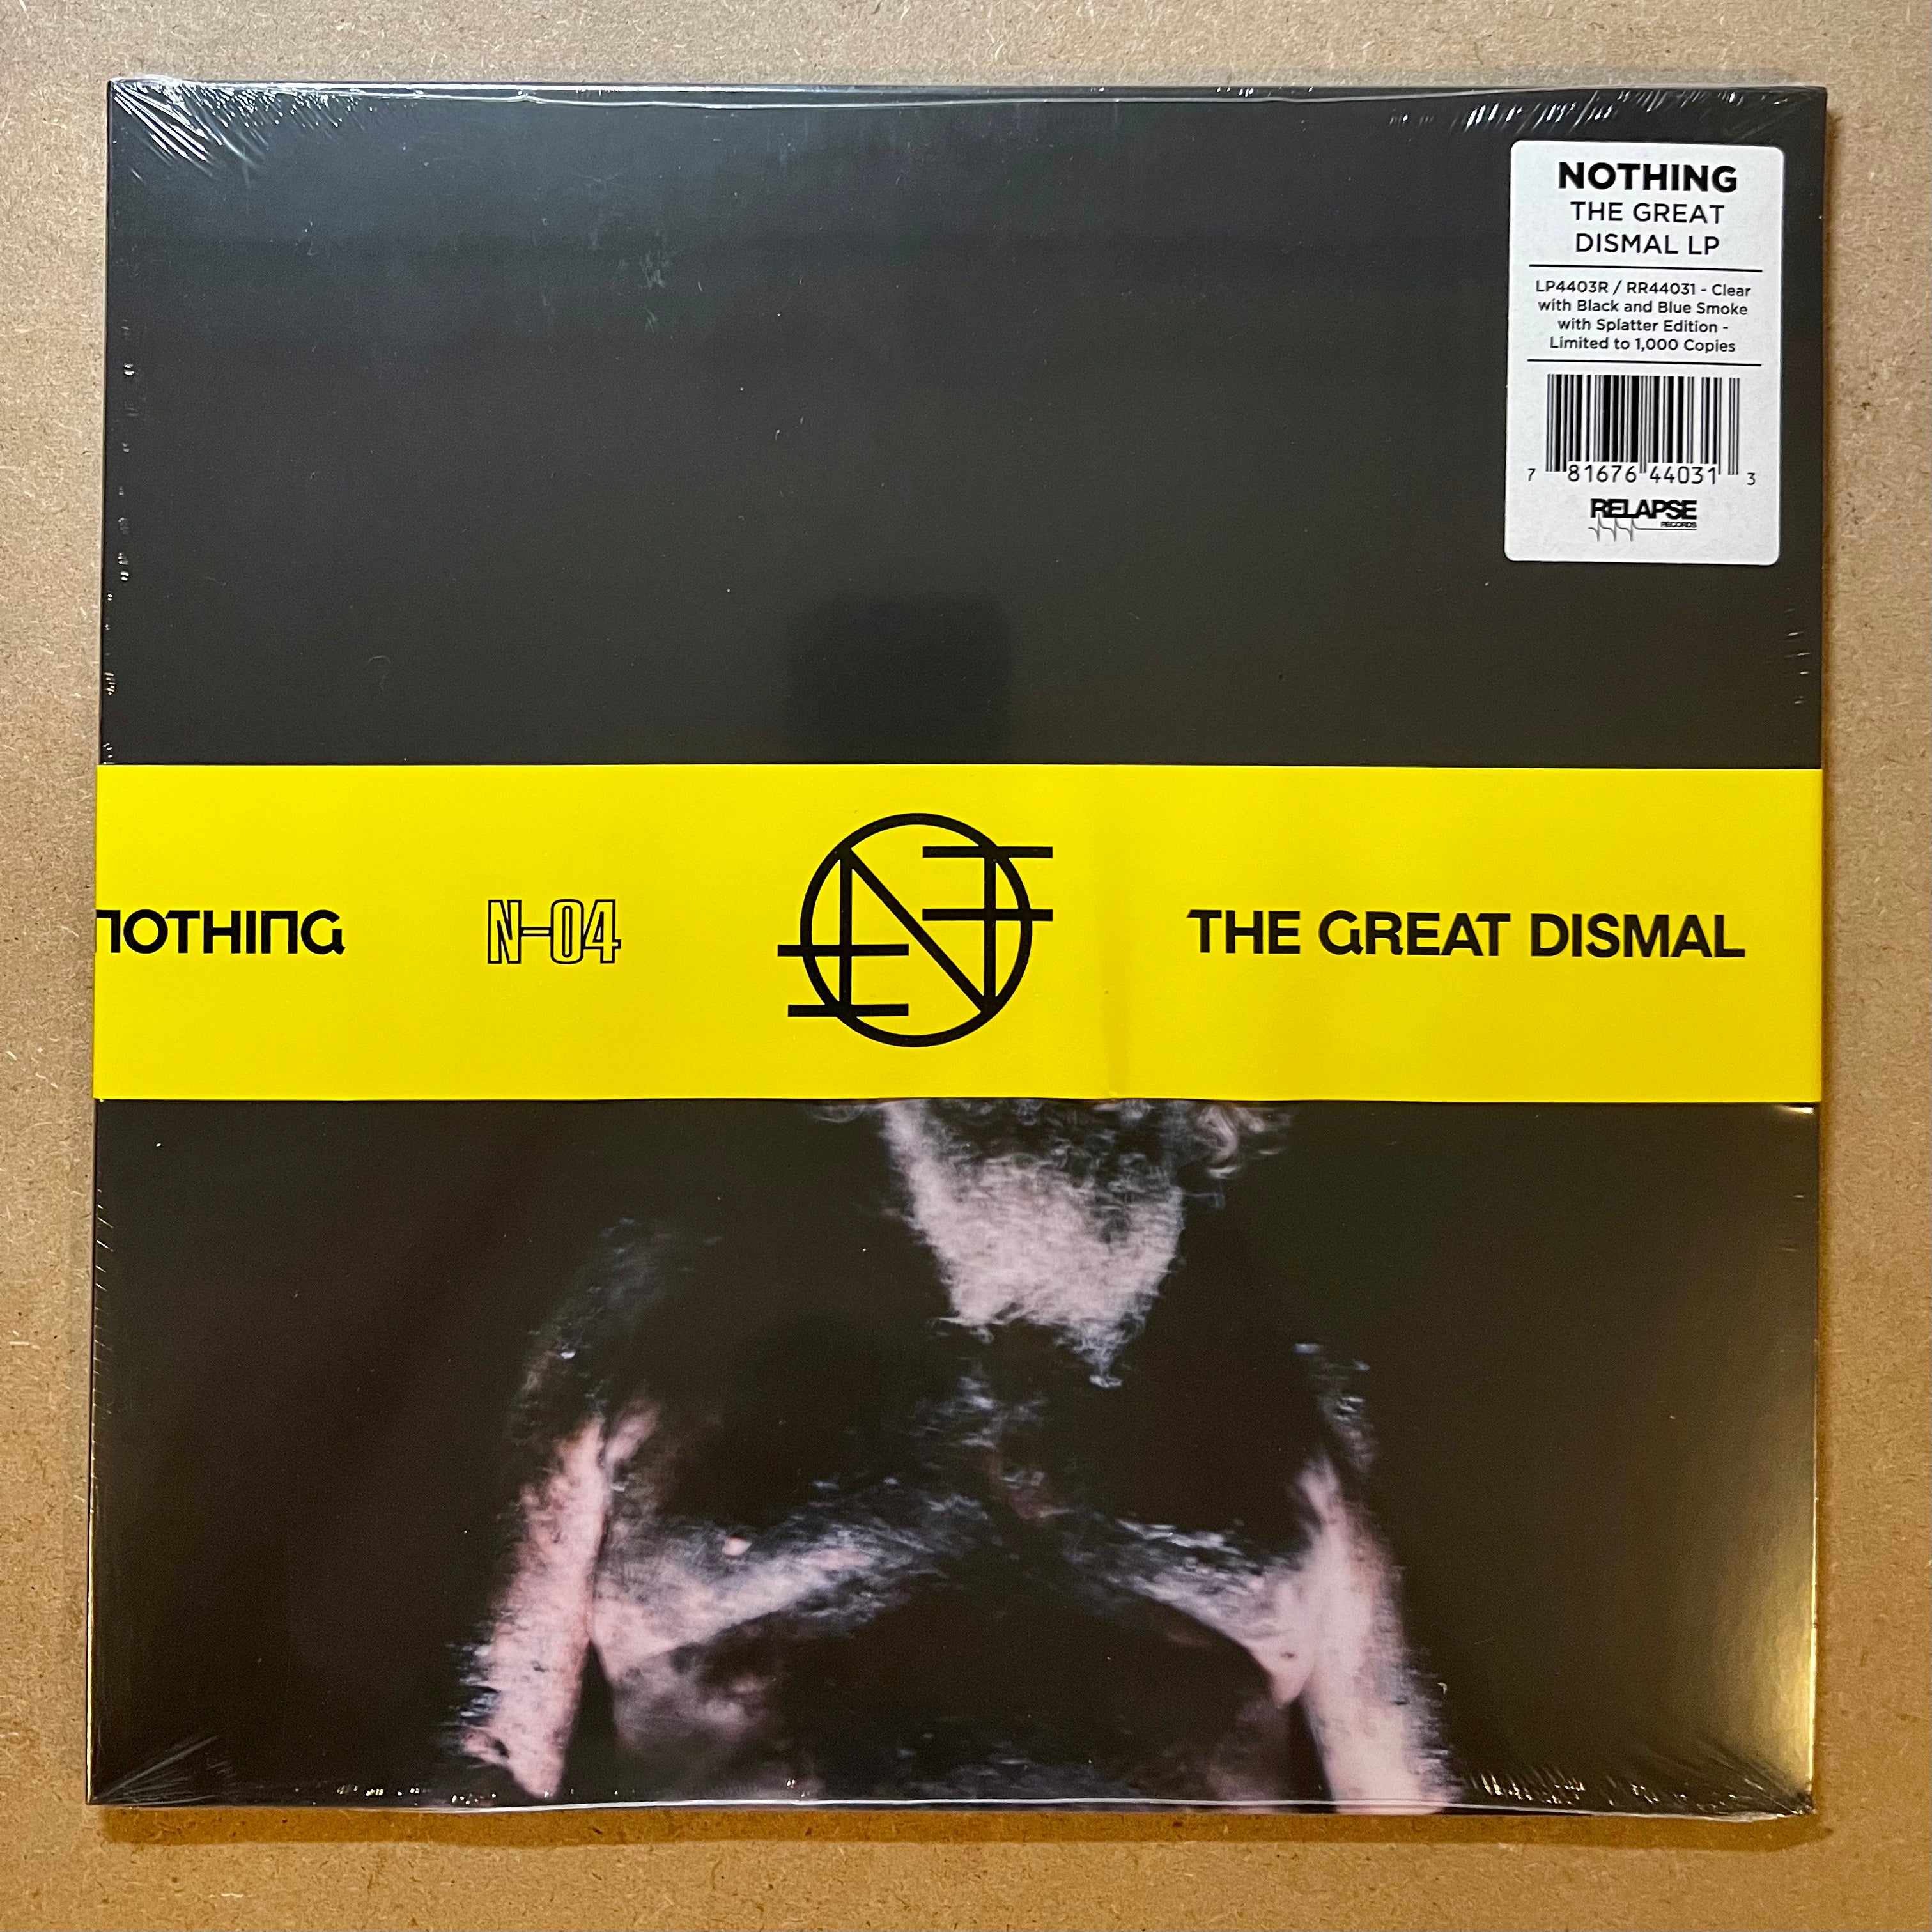 Nothing: The Great Dismal: Clear/Black/Blue Smoke/Splatter Vinyl